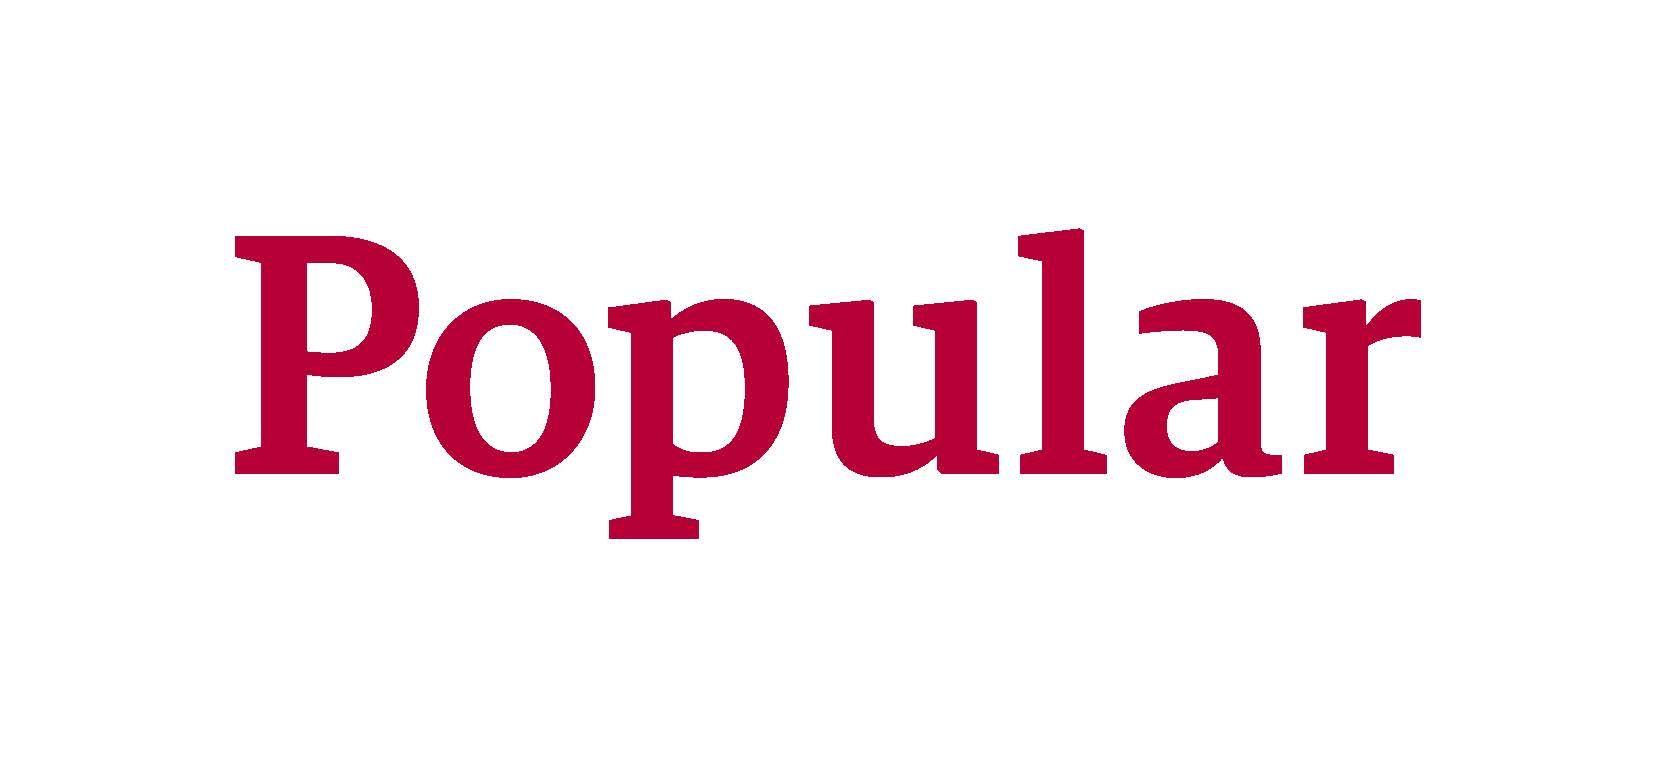 the word popular